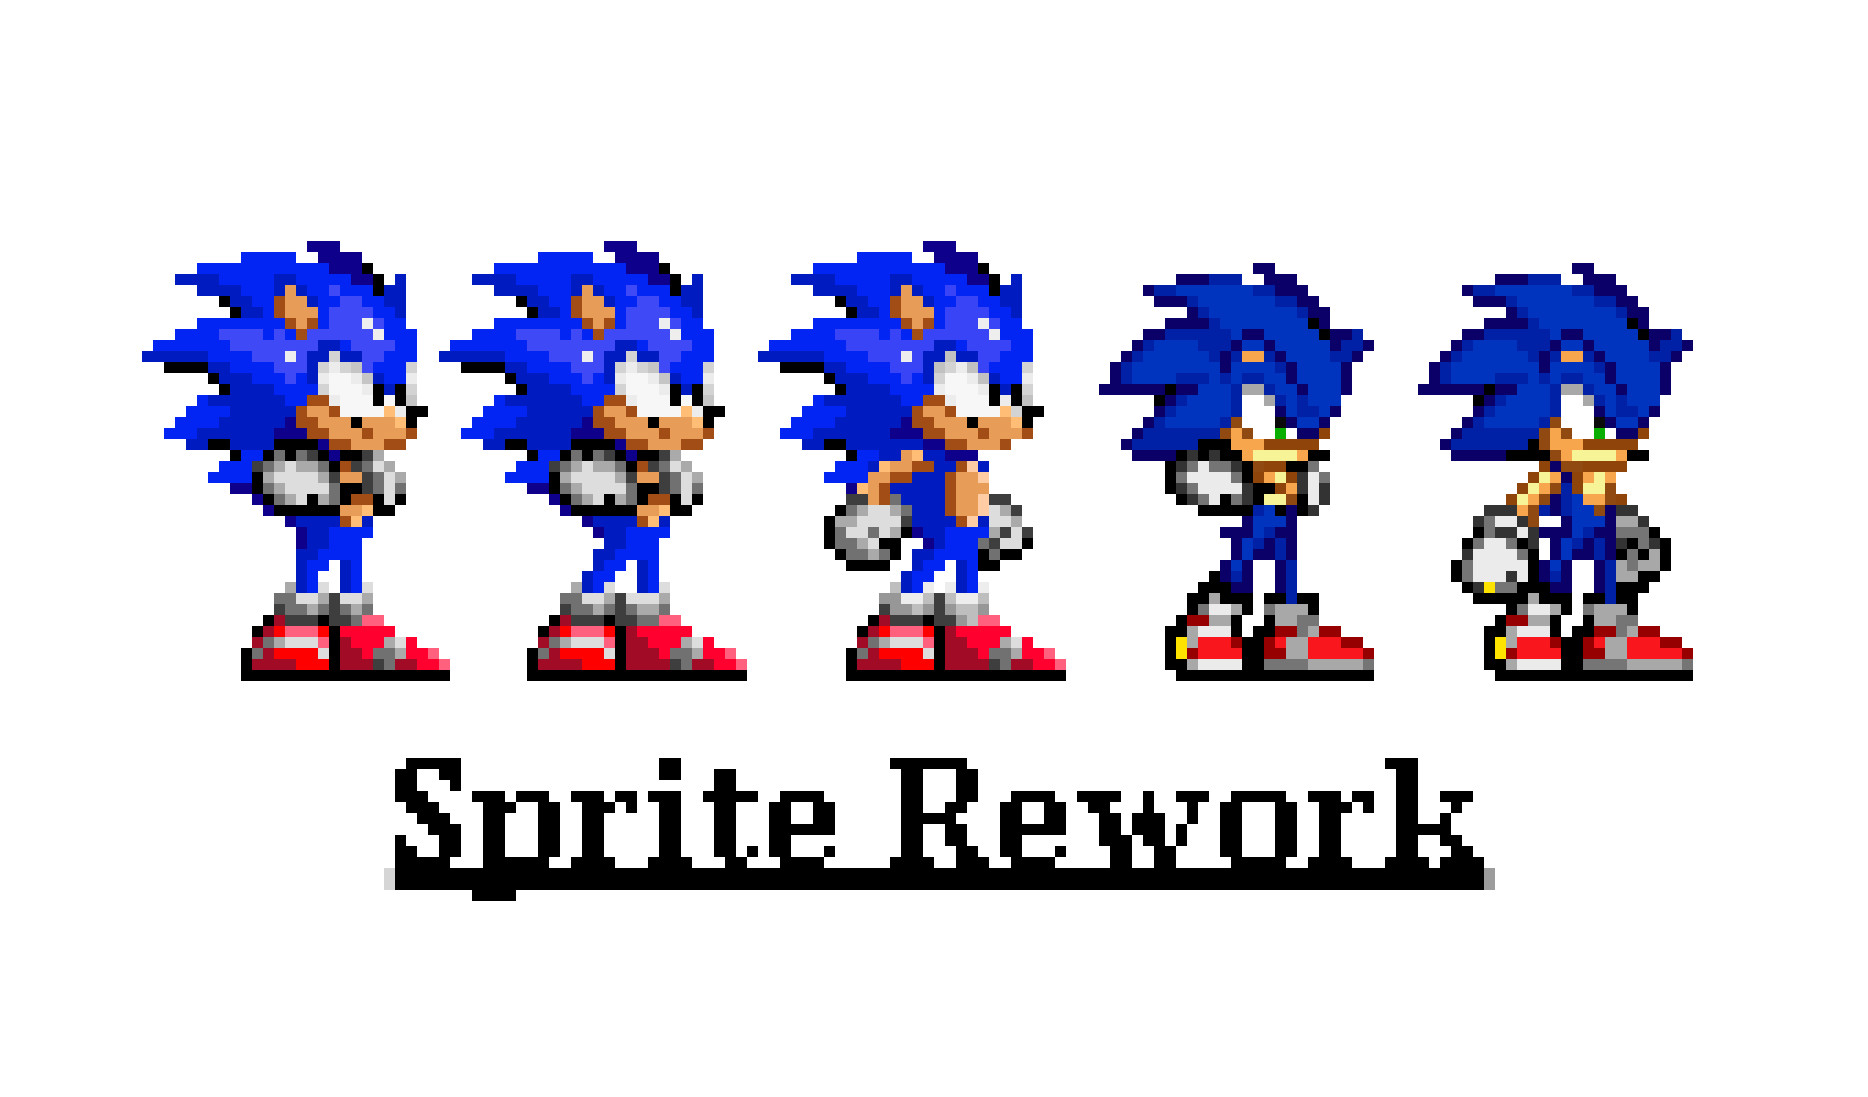 Sonic sprite animation tests